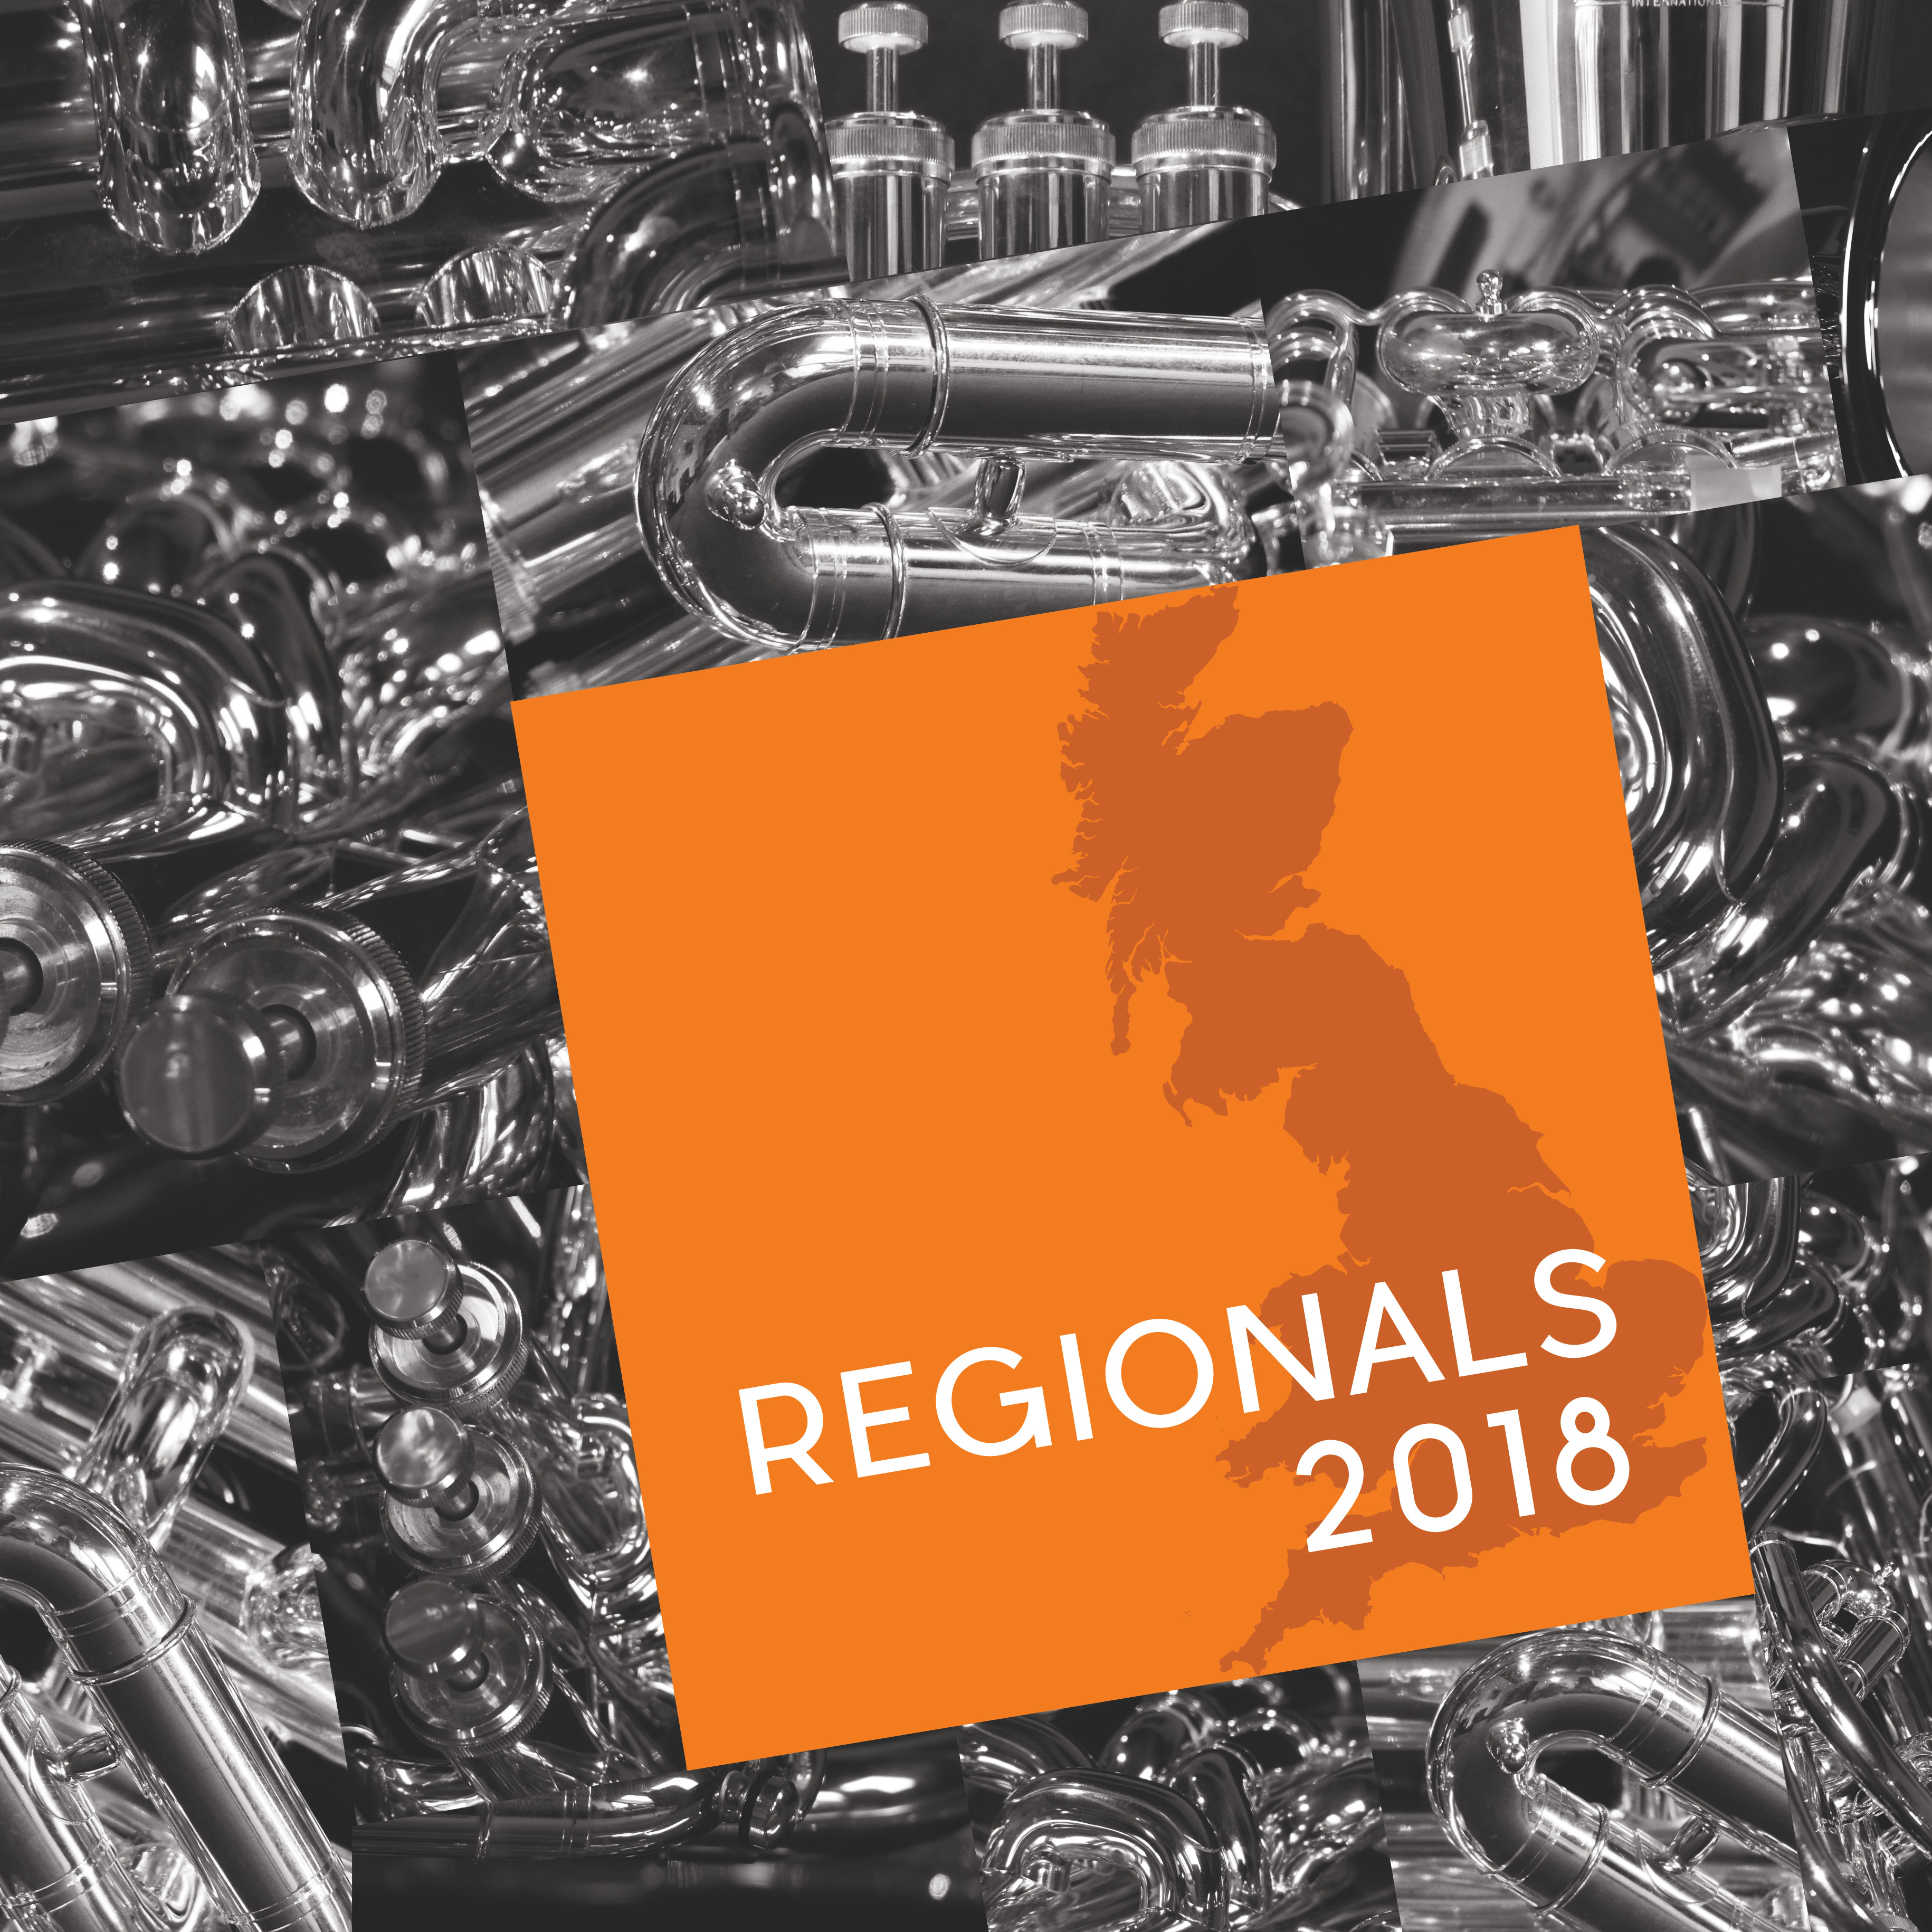 Regionals 2018 - Download